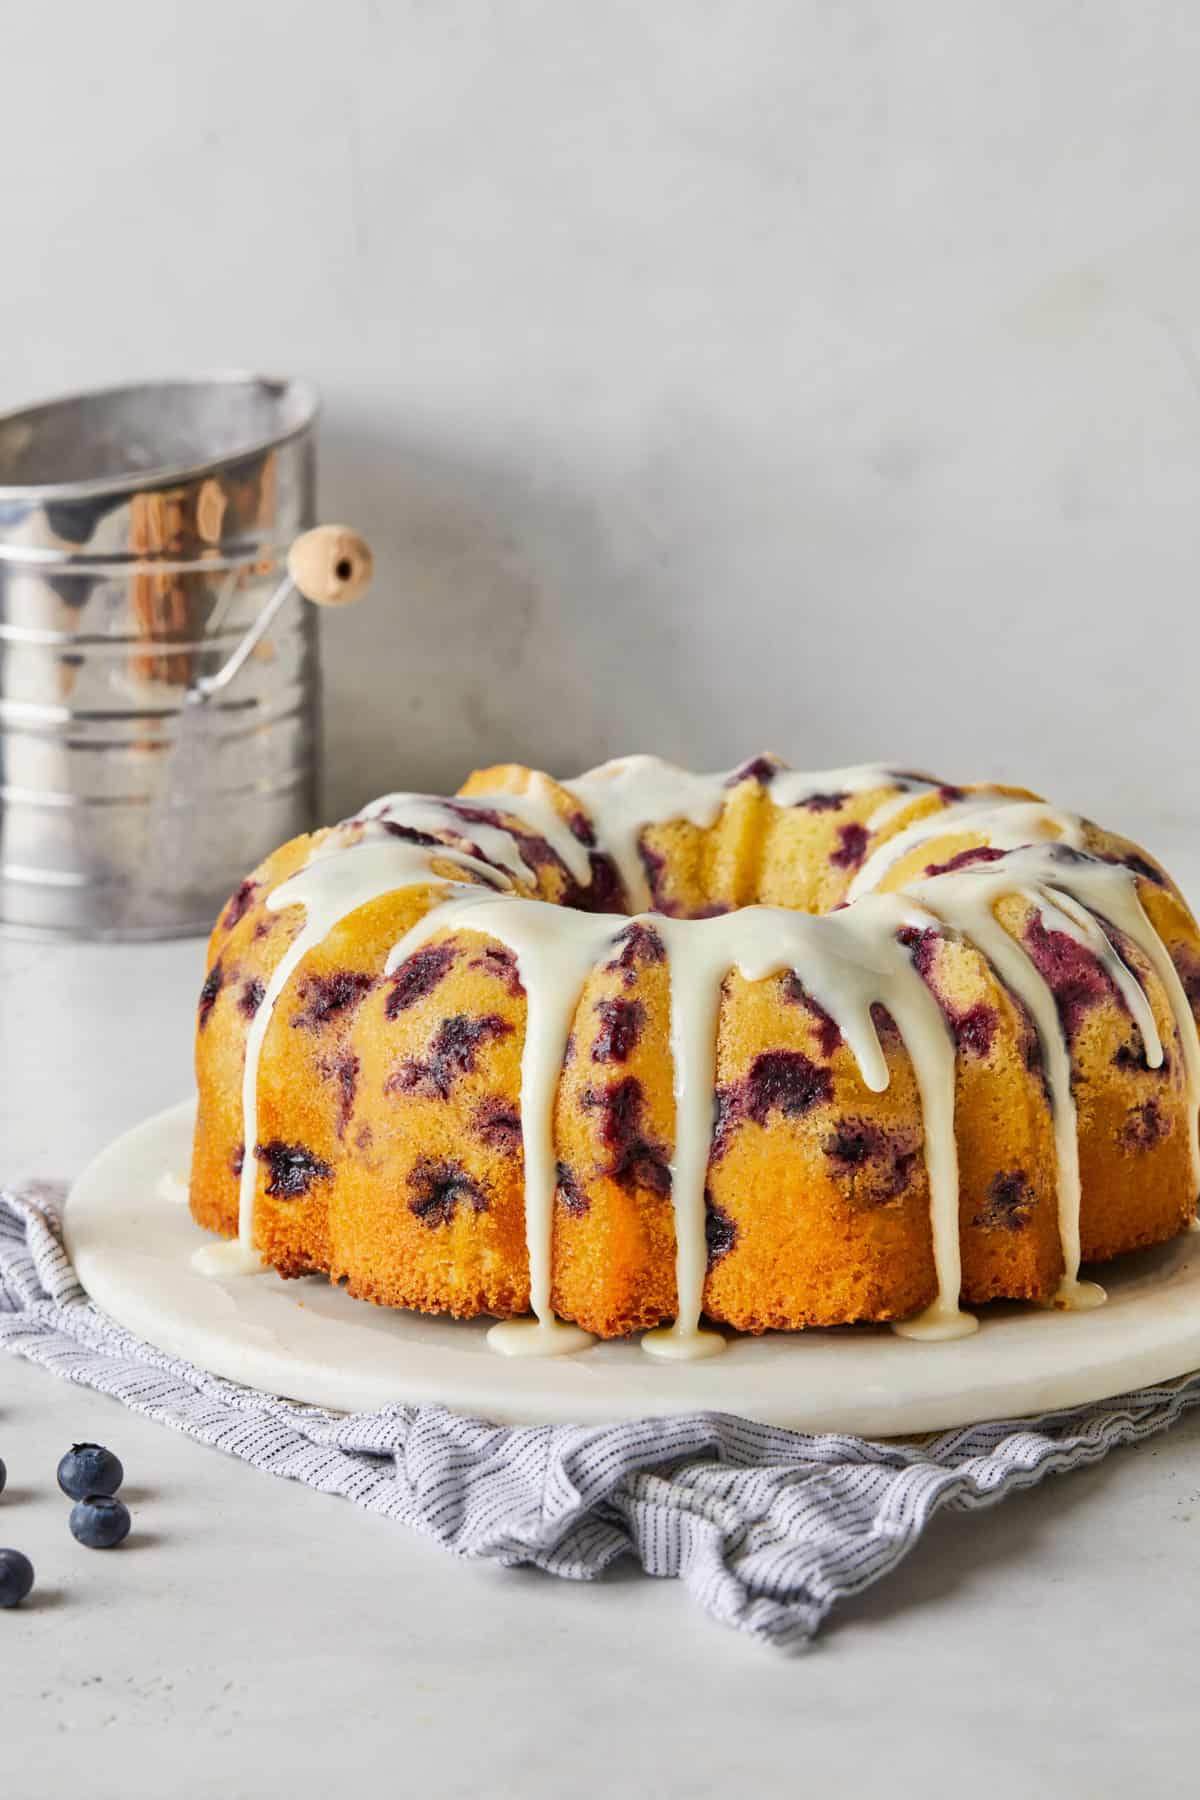 An icing on a blueberry orange pound cake ready to enjoy